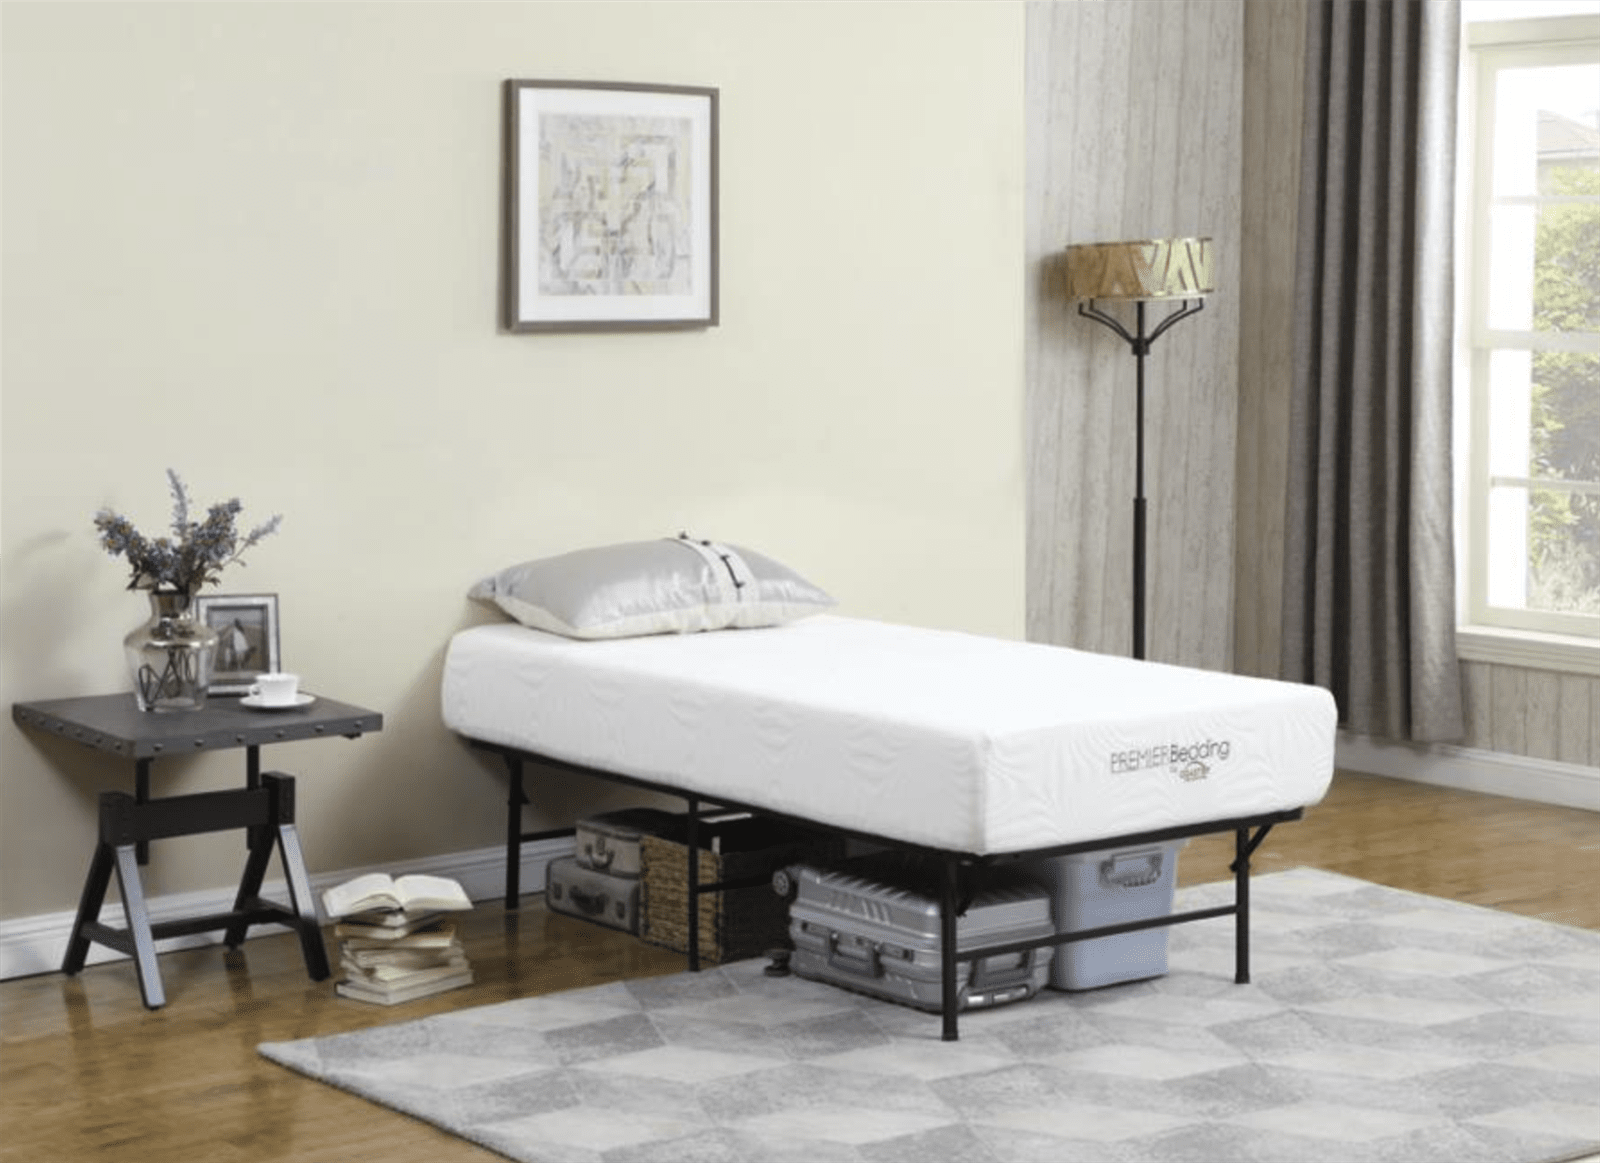 Waldin Folding Platform Bed Frame - Twin Size